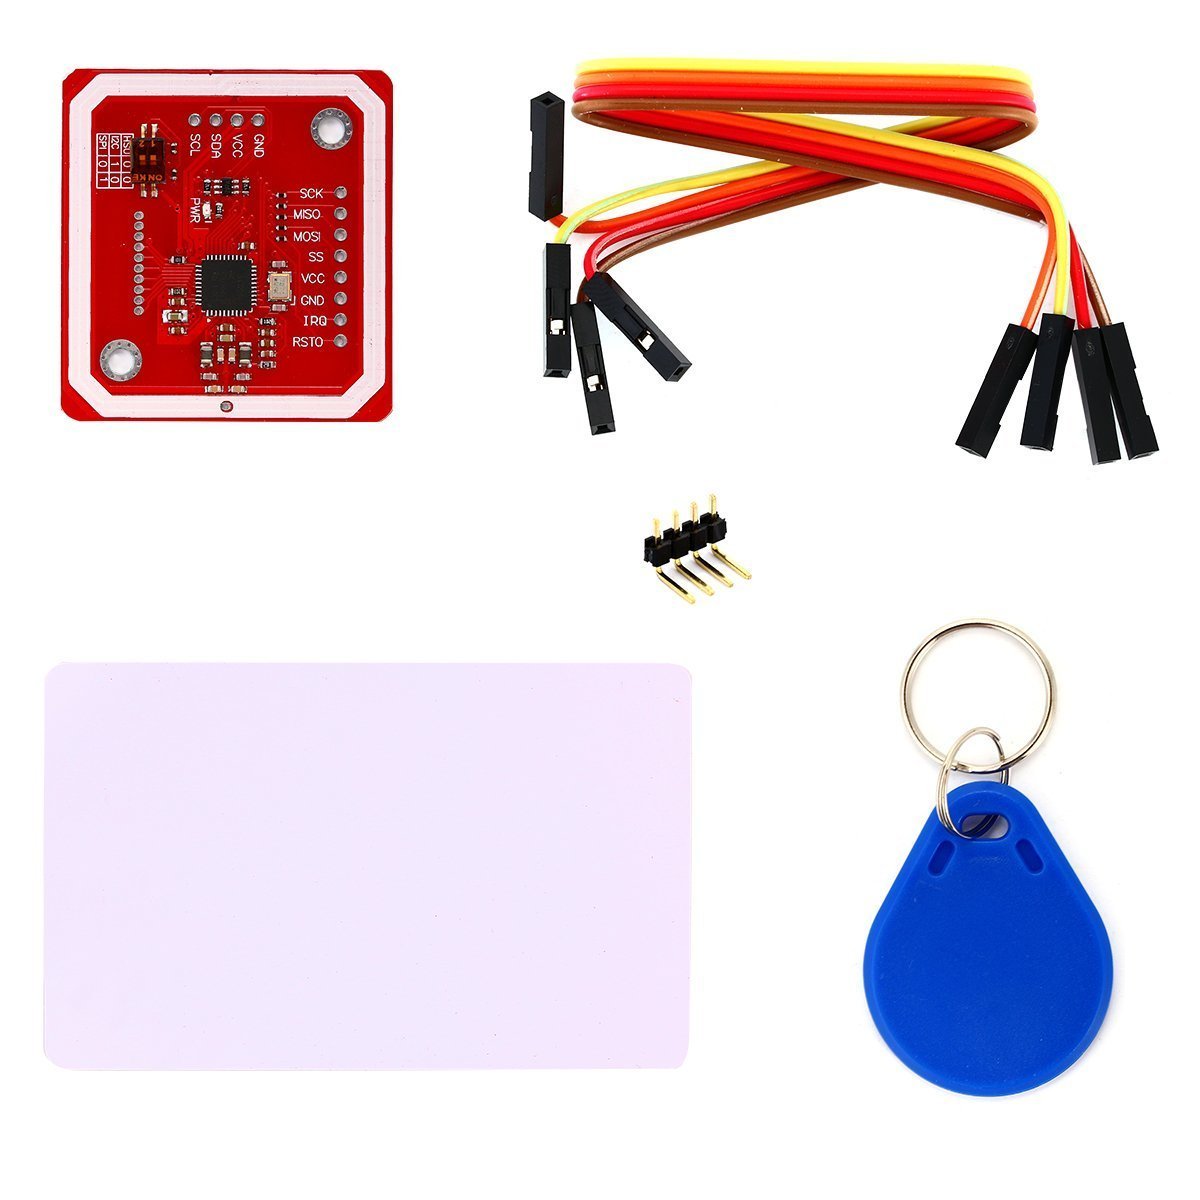 PN532 NFC RFID module for Raspberry Pi